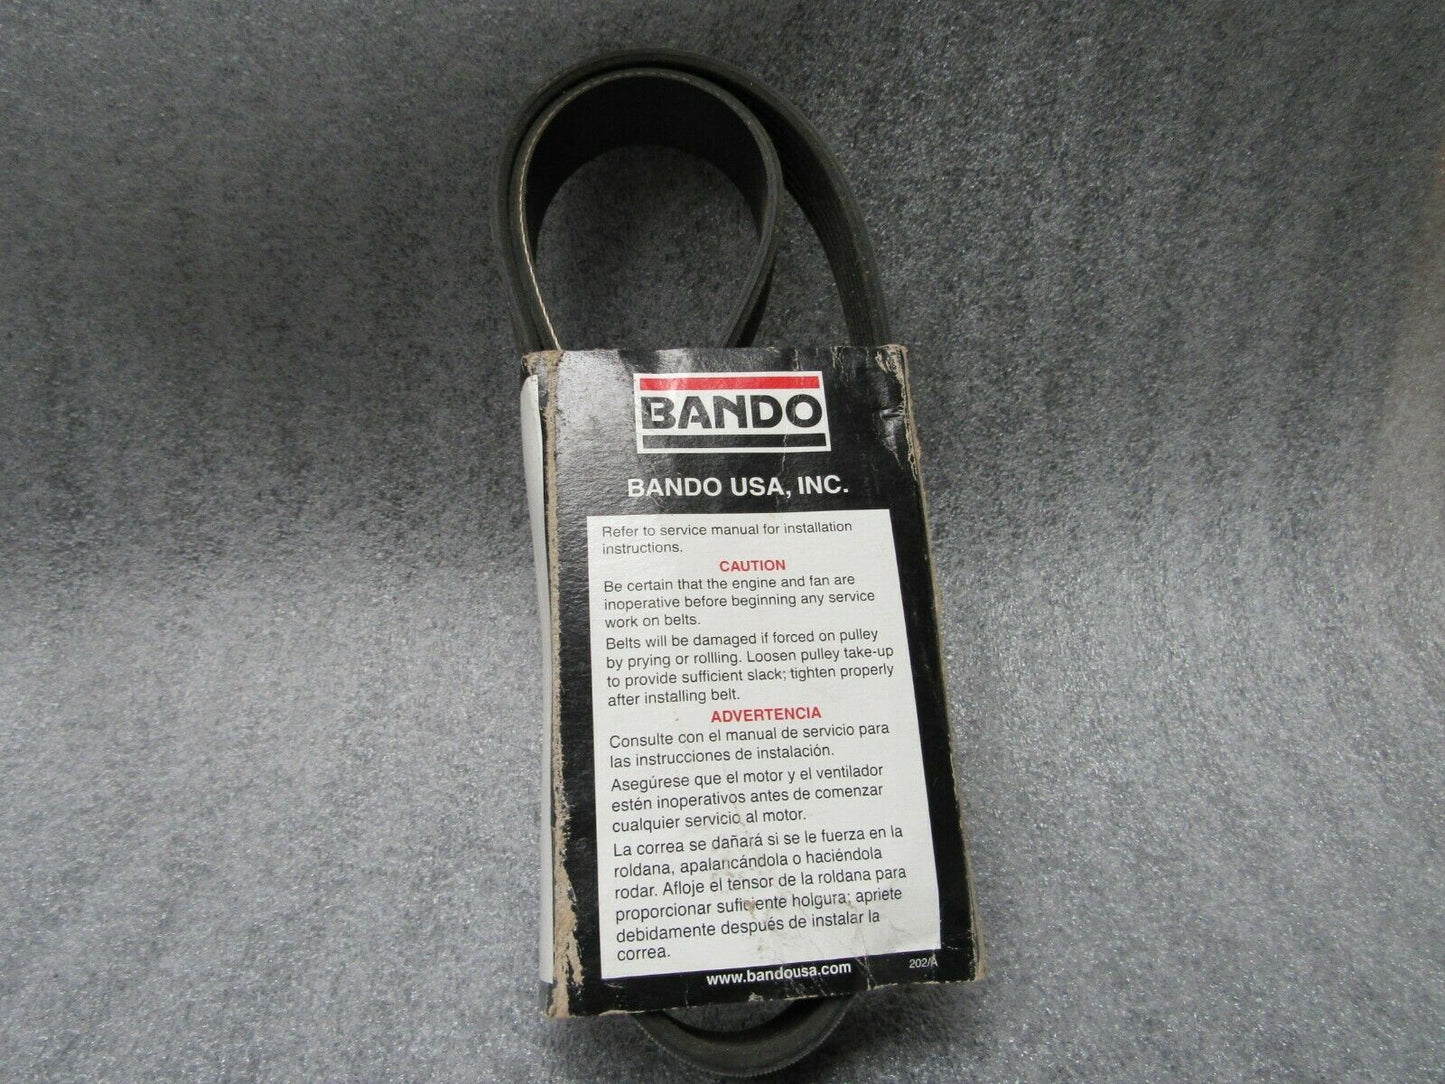 BANDO Serpentine Belt, Industry Number 408K8, 40.8" Outside Length (184160385725-WTA06)